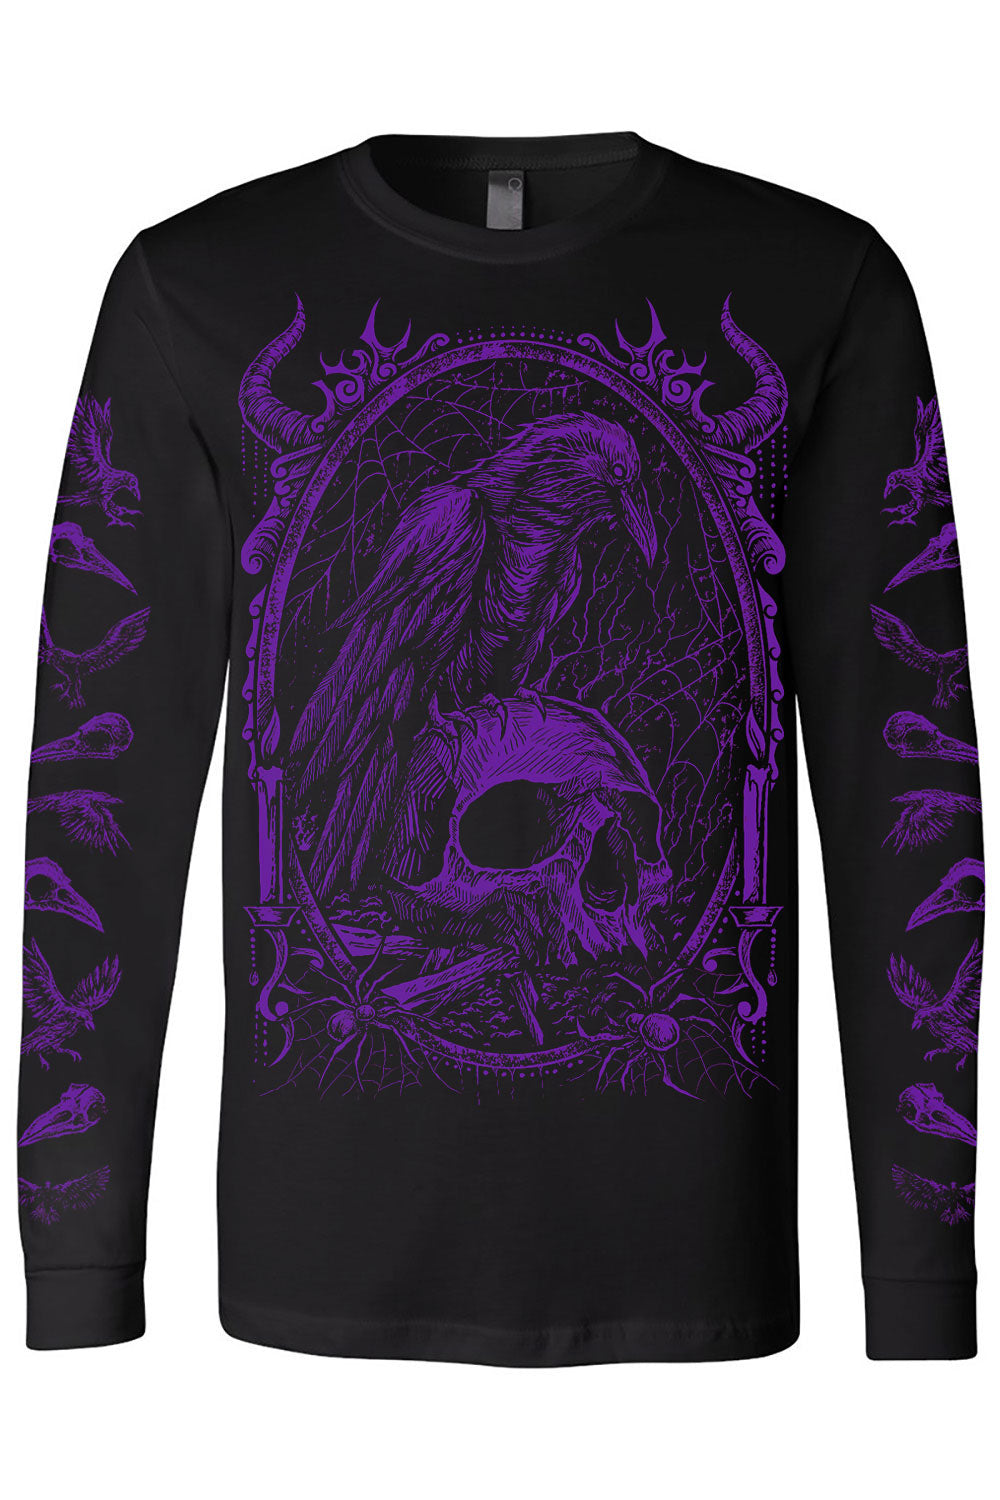 gothic raven tshirt